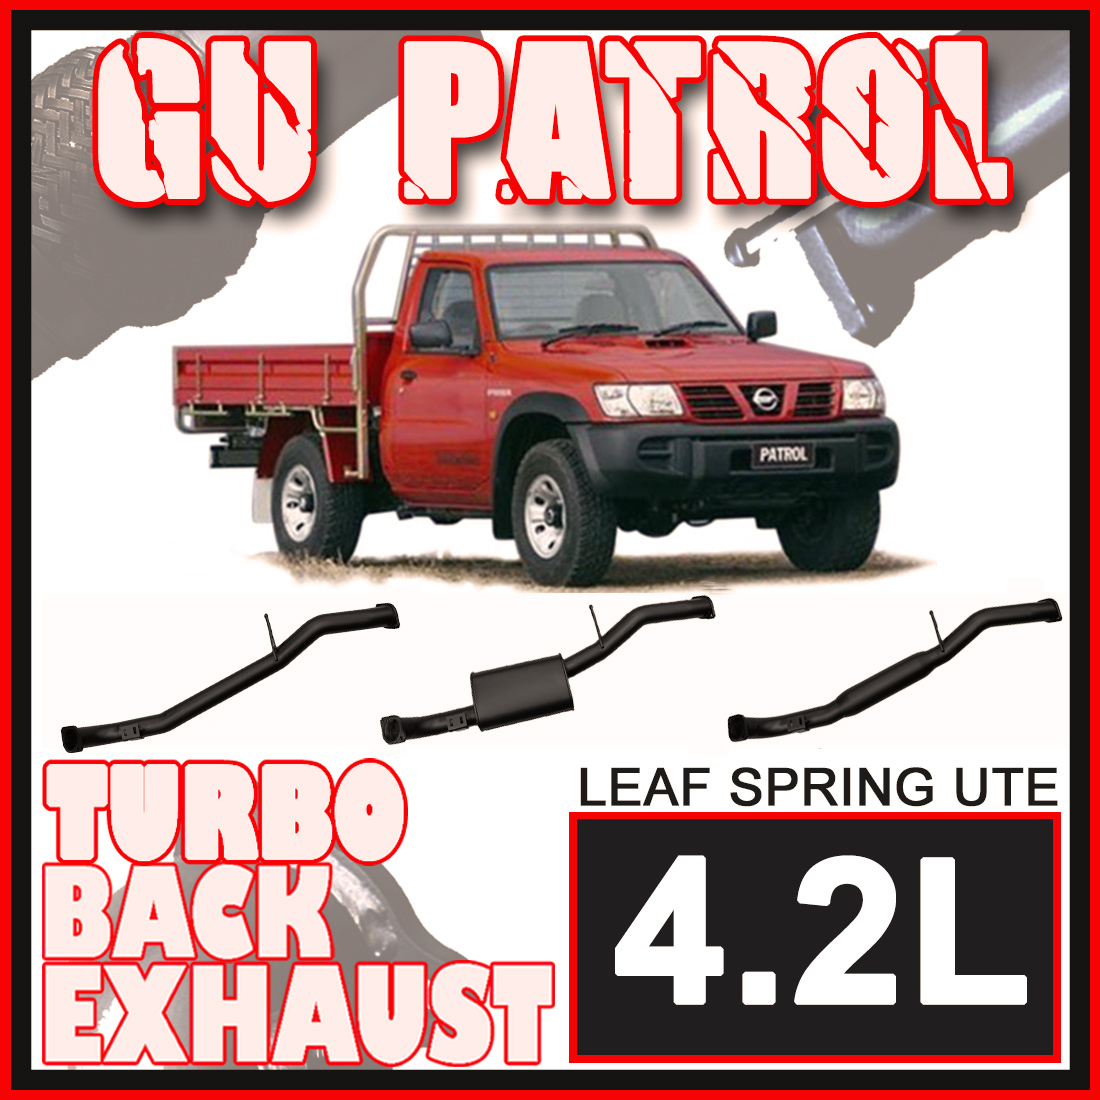 Nissan GU Patrol Exhaust Leaf Spring Ute 4.2L 3" Inch Systems image